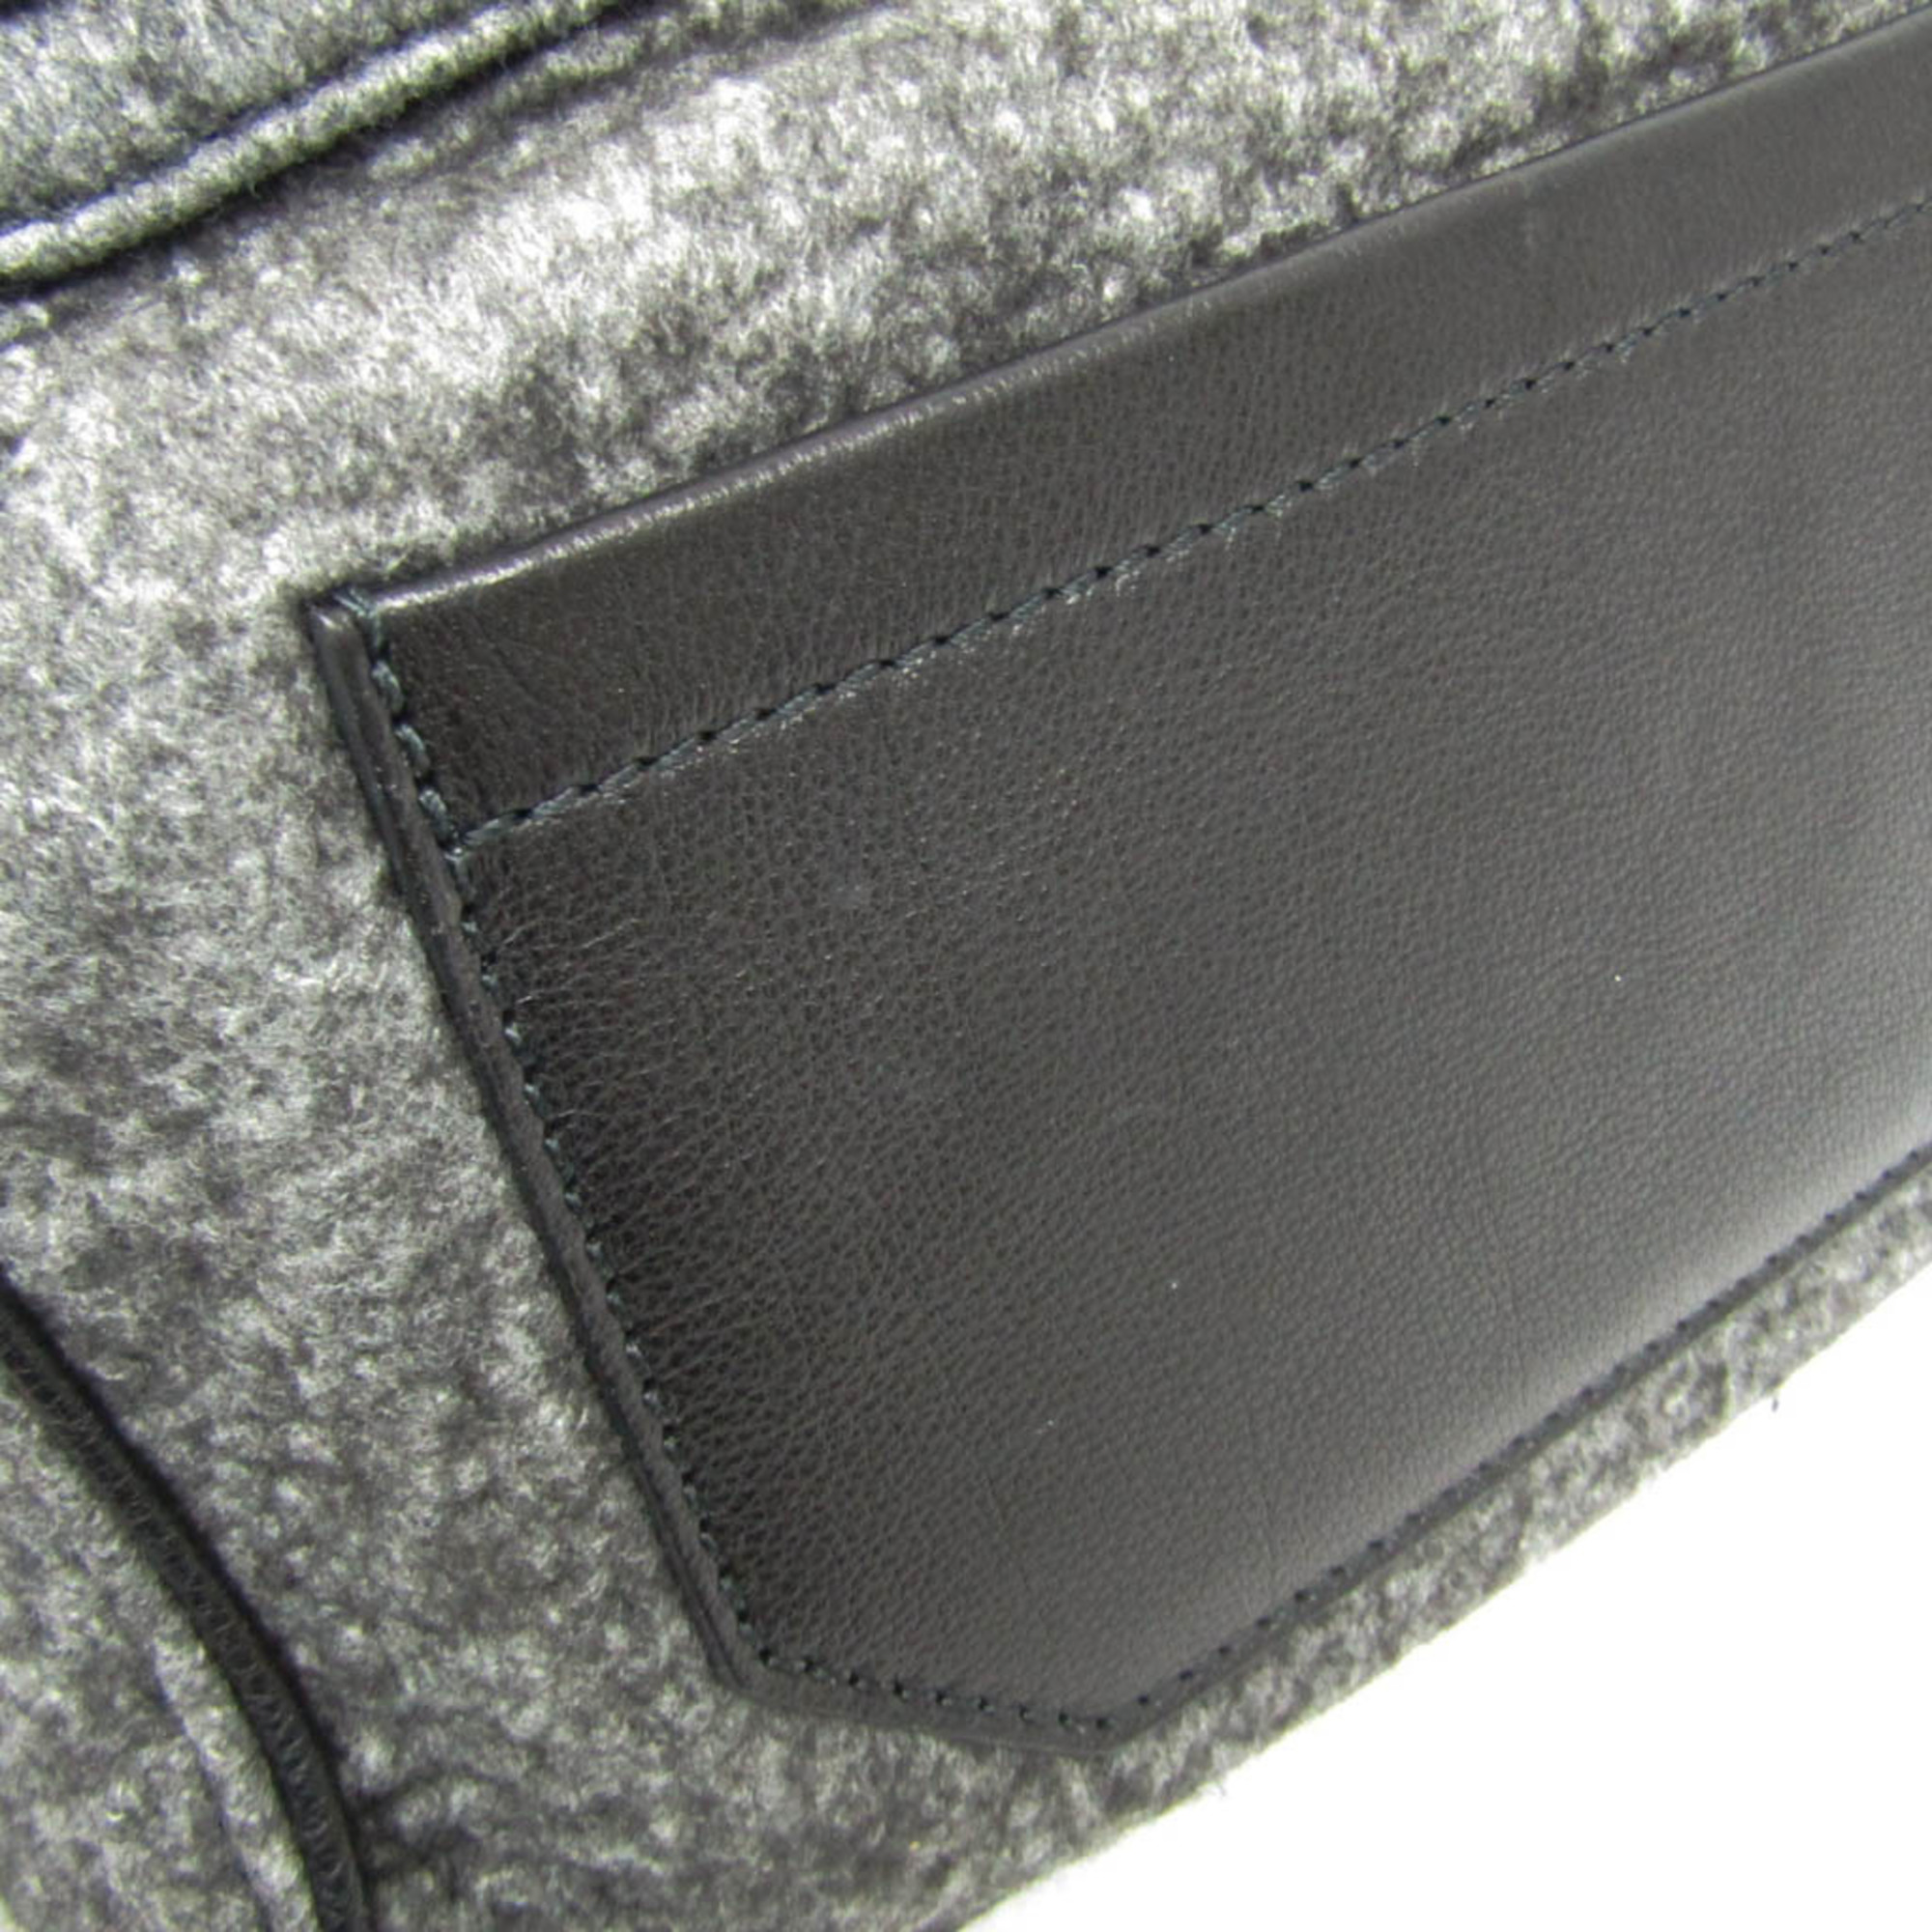 Proenza Schouler Women's Leather,Cotton Handbag,Shoulder Bag Black,Gray